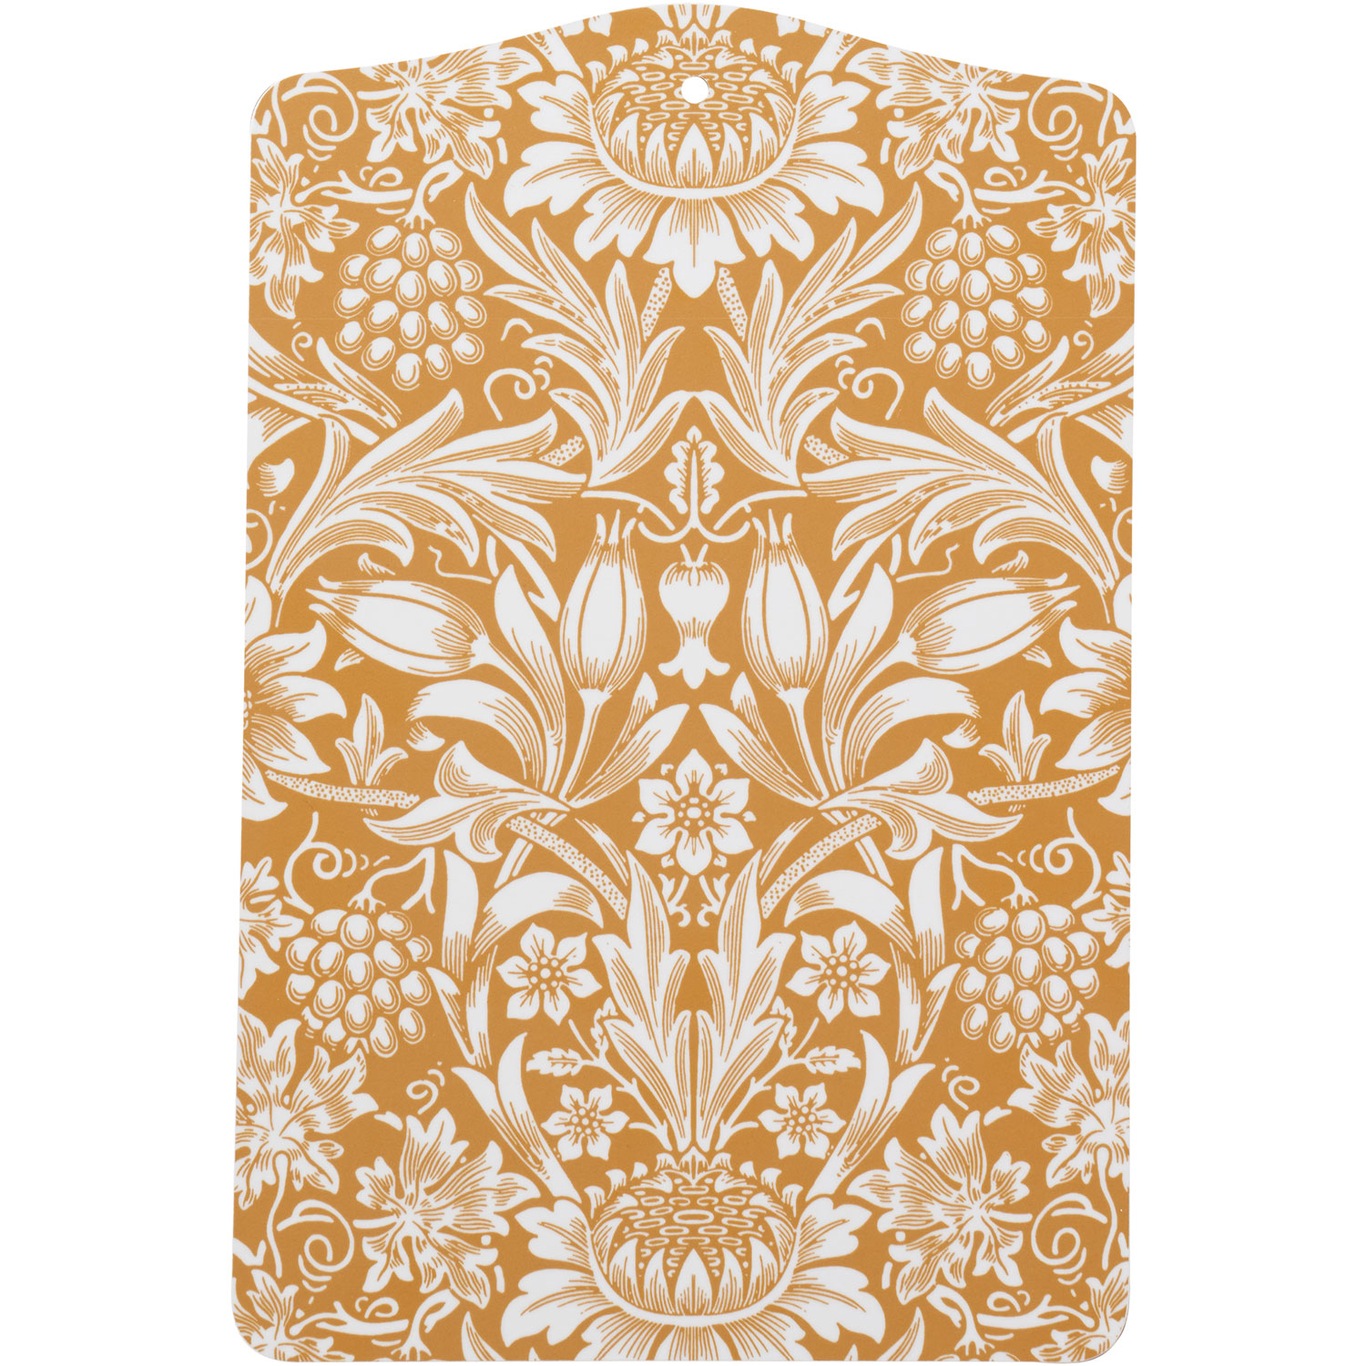 https://royaldesign.com/image/2/klippan-yllefabrik-sunflower-golden-cutting-board-golden-29x19-0?w=800&quality=80